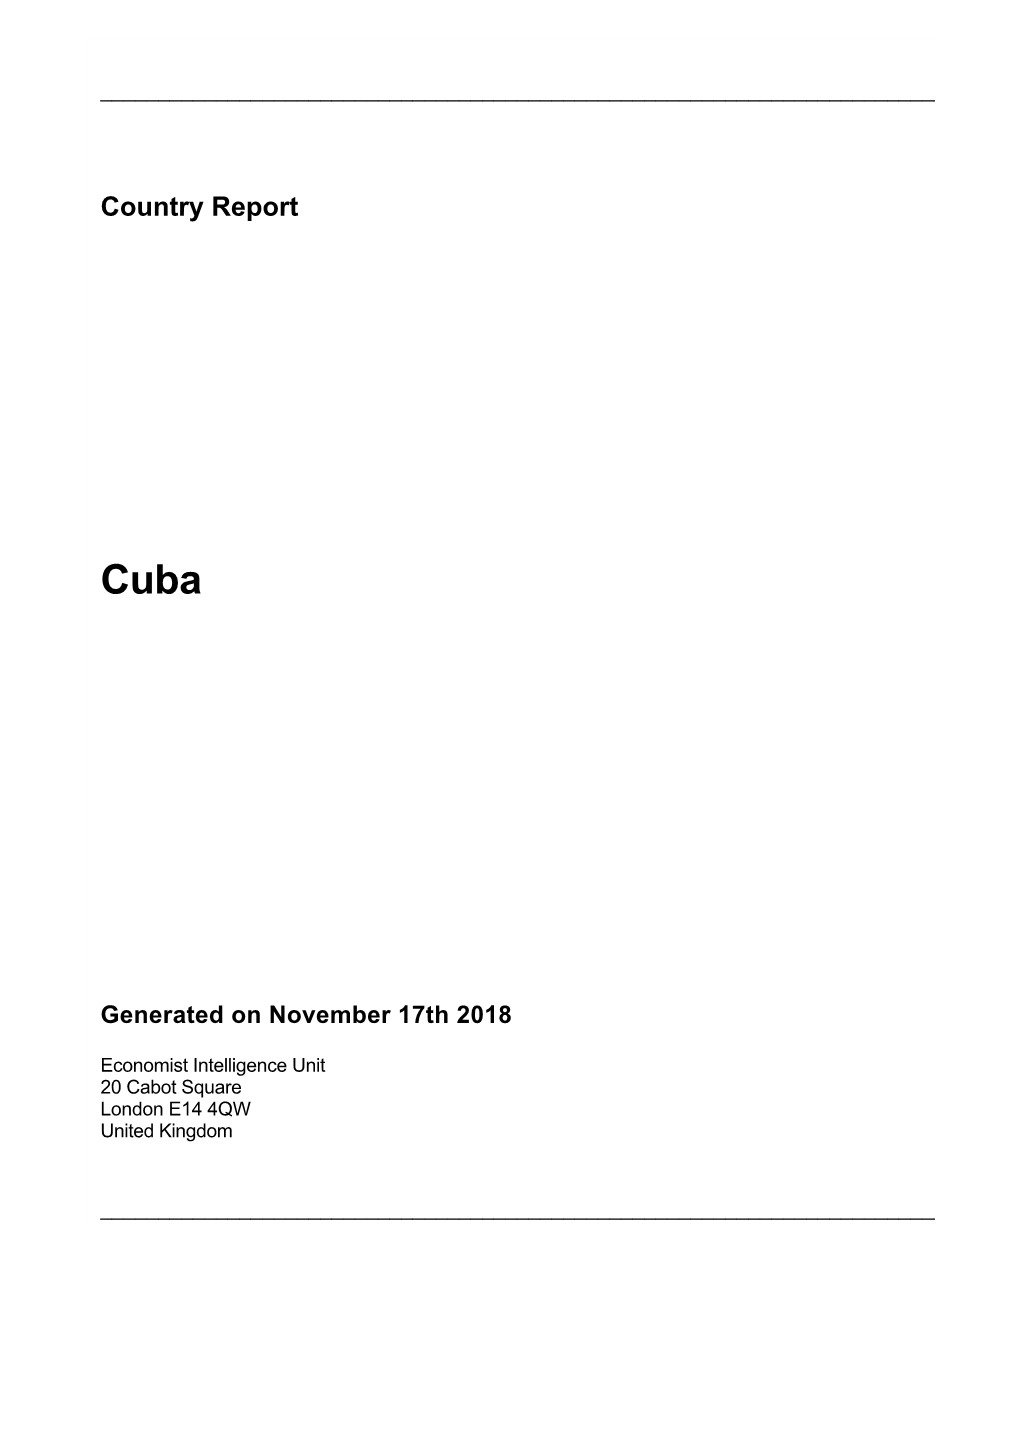 Country Report Cuba November 2018